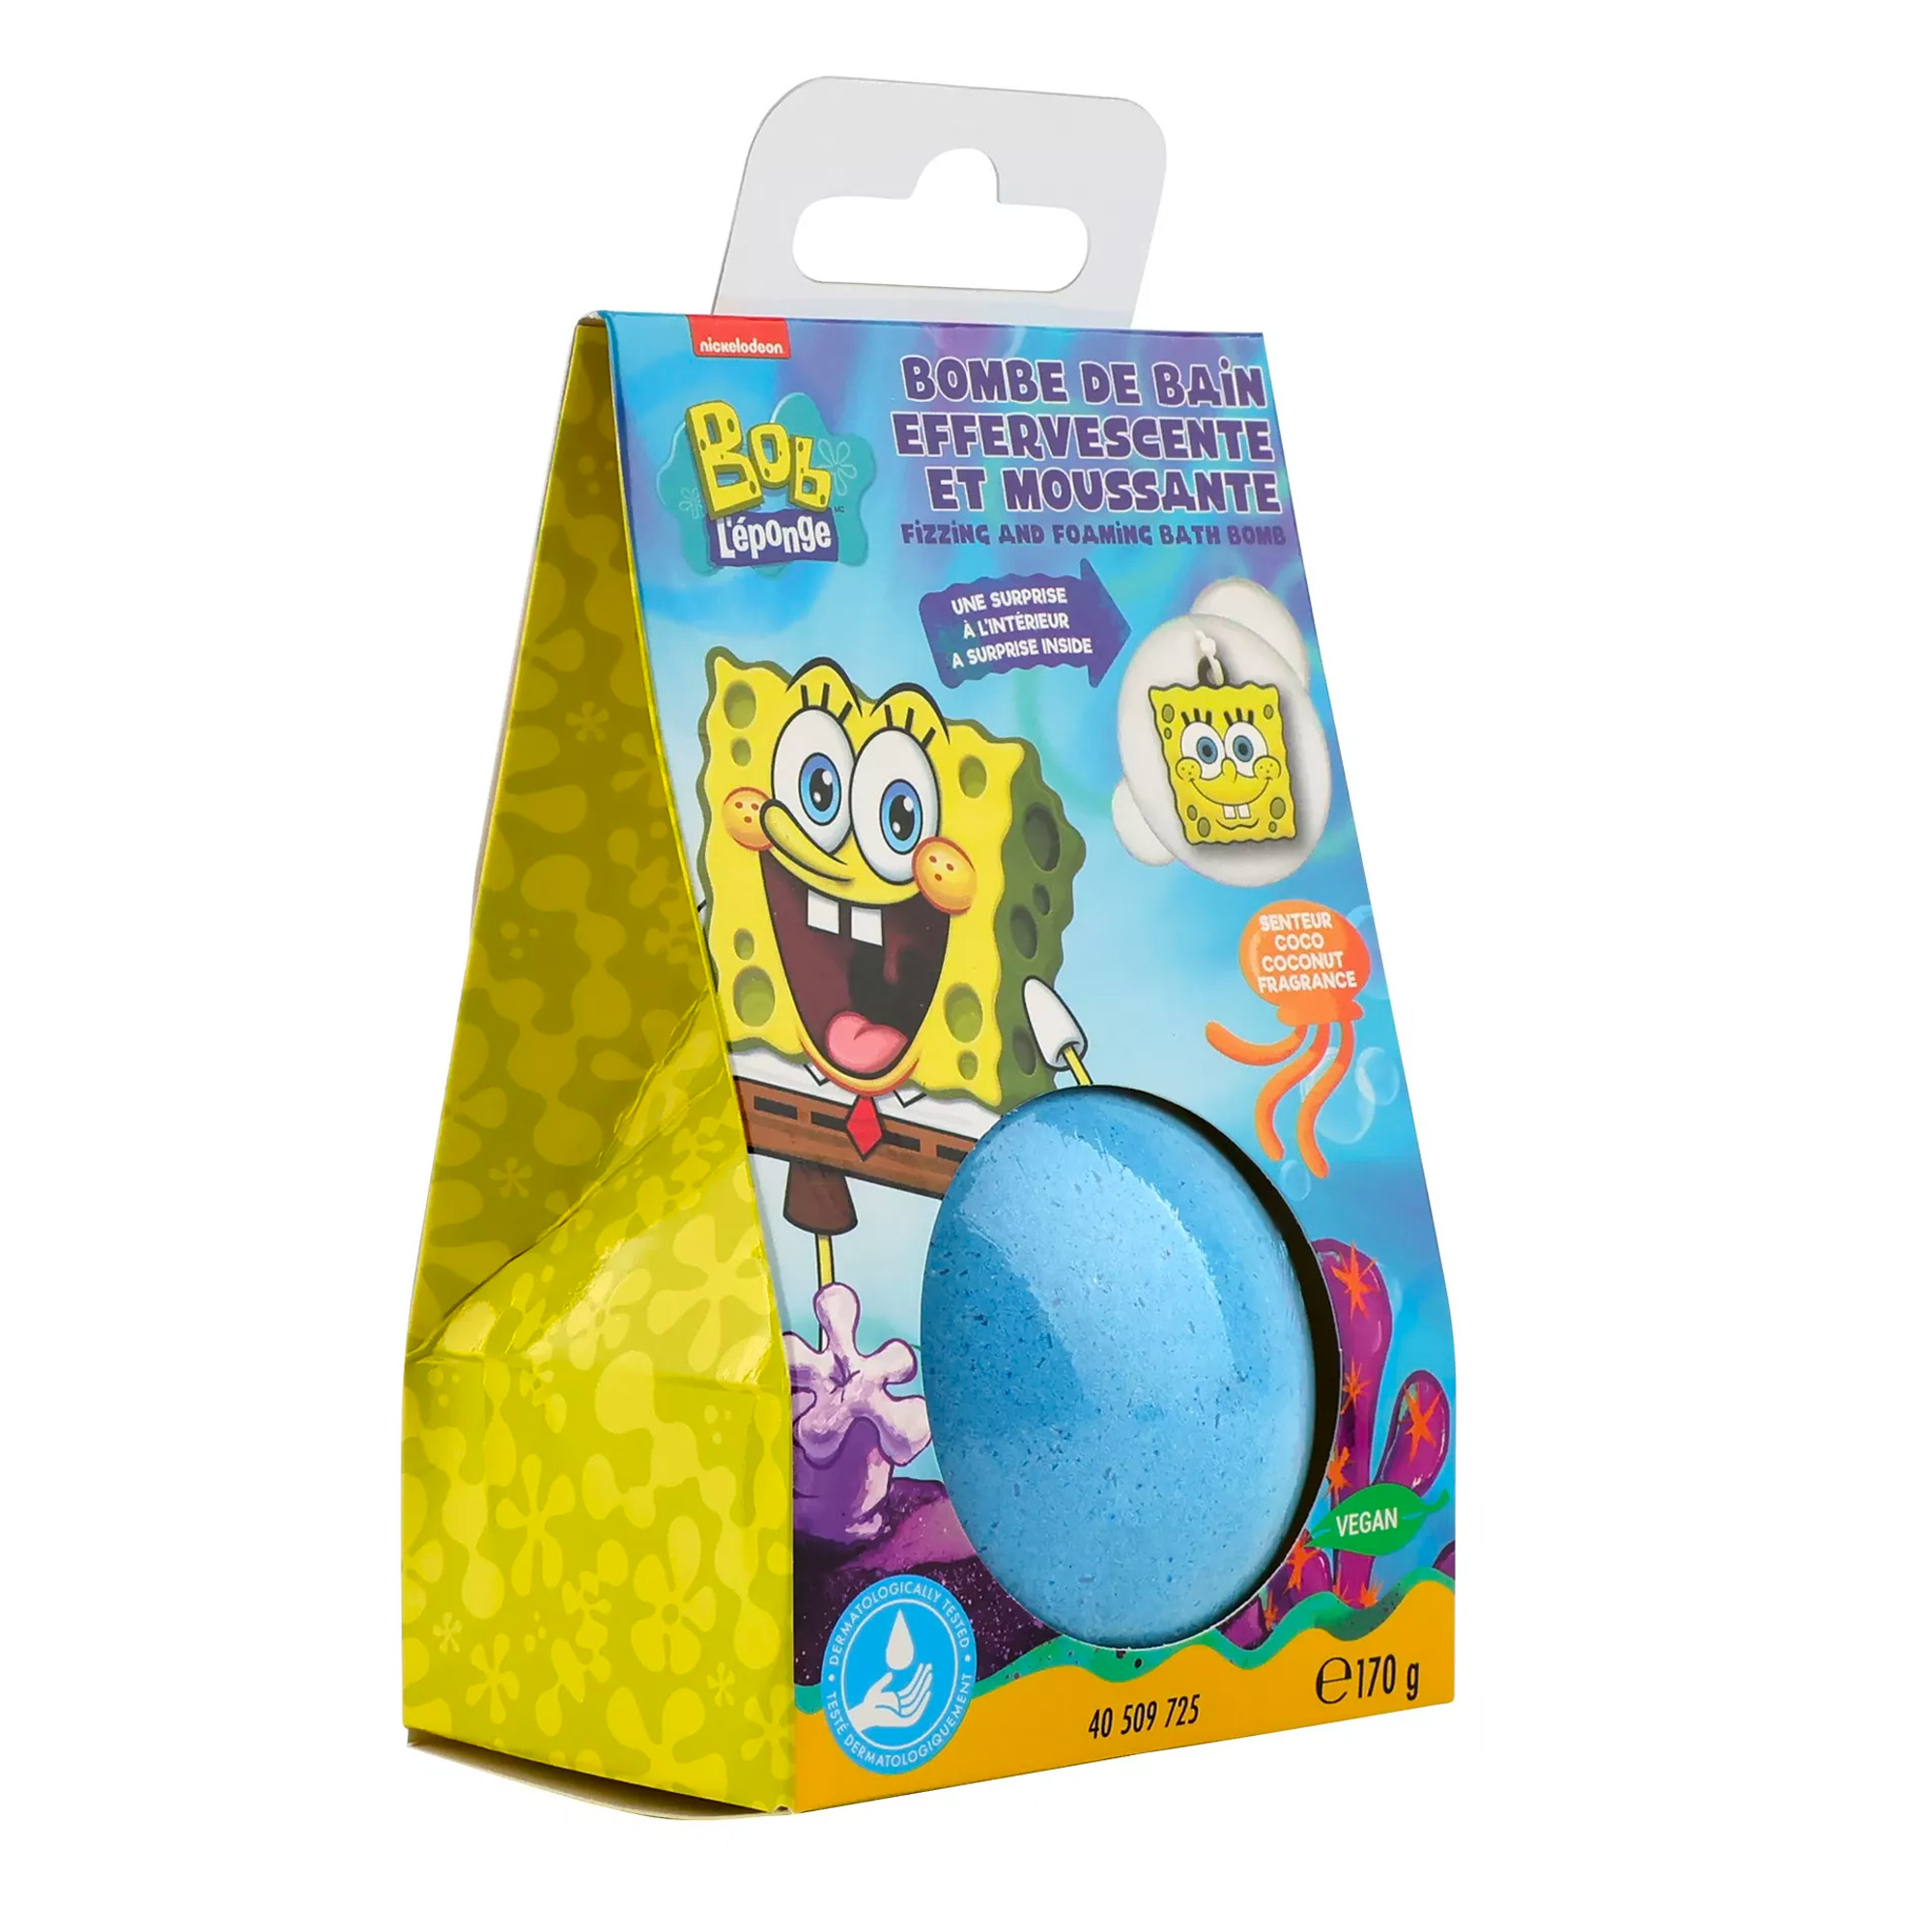 Sponge Bob - Badebombe mit Überraschung im Inneren